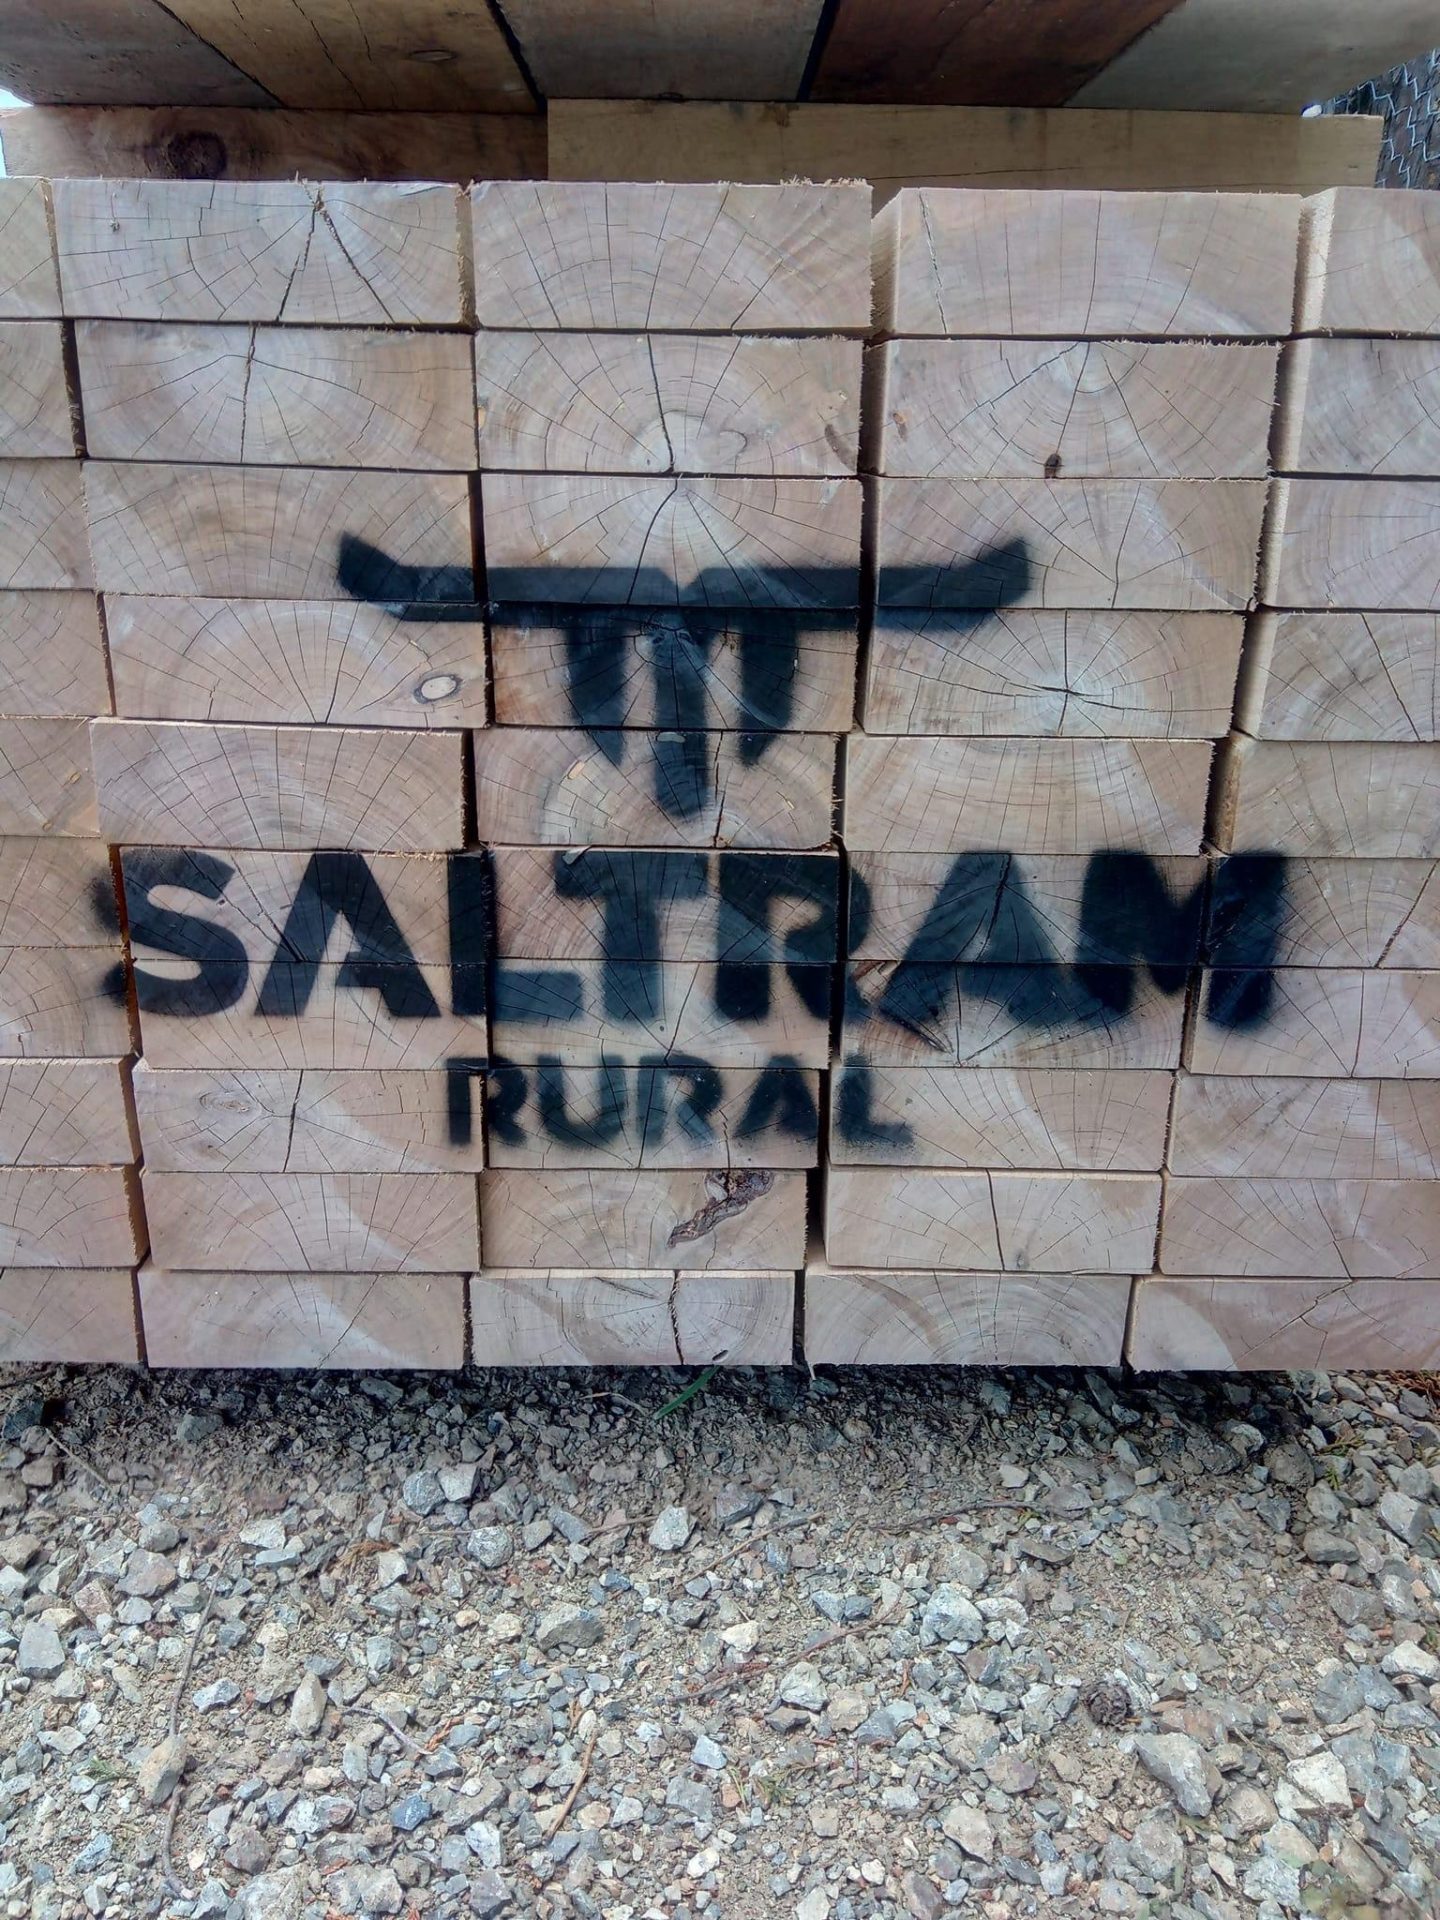 Saltram Rural Branded Timber